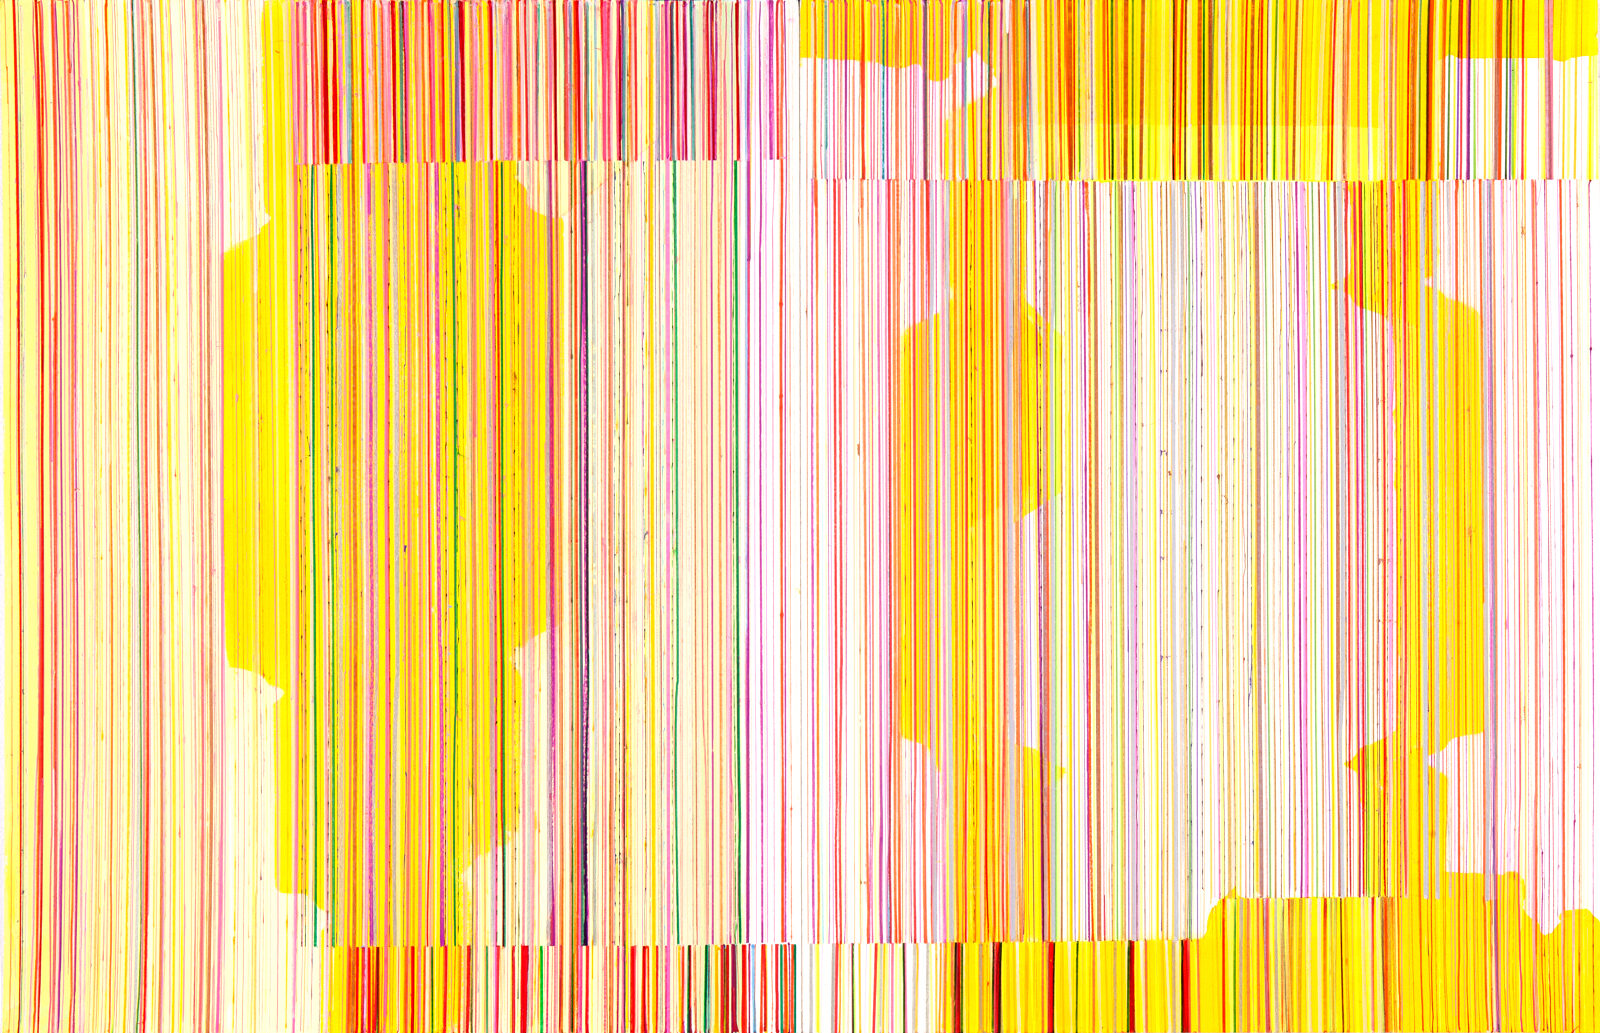 Data Kraft by Antonietta Grassi.